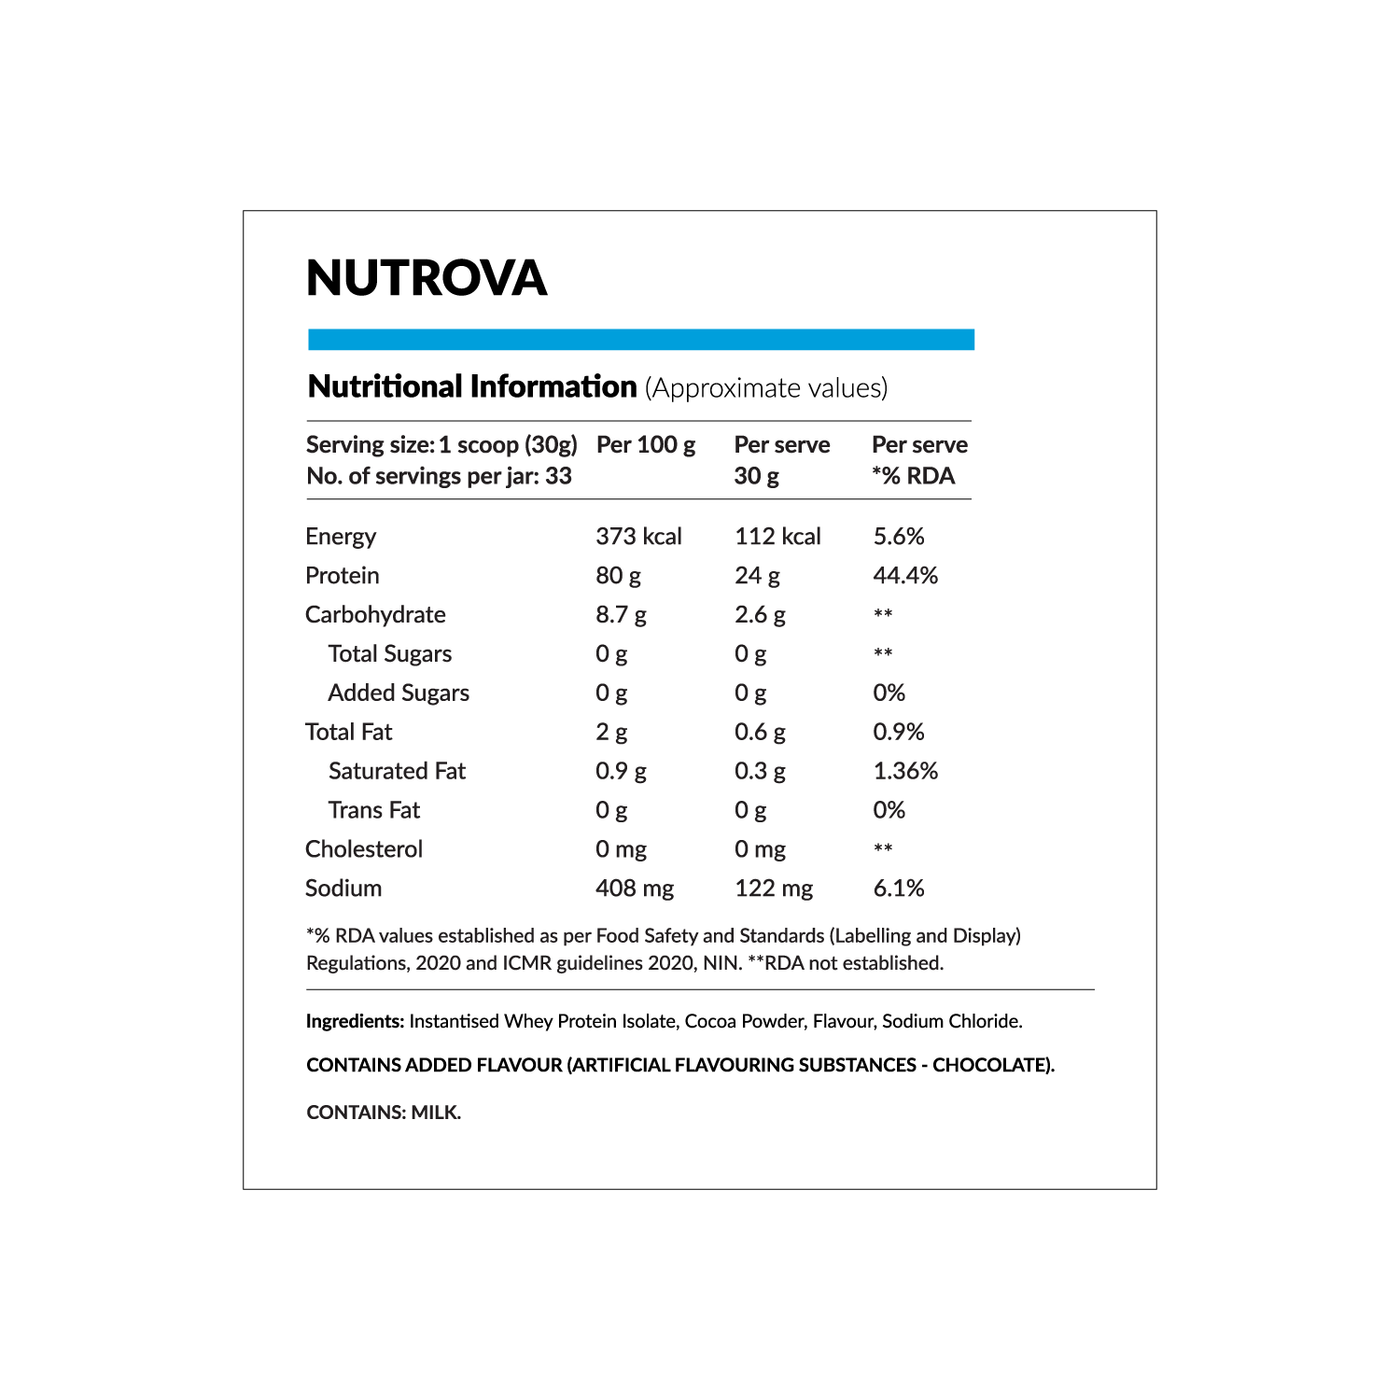 Nutrova Whey Protein Isolate (Dark Chocolate)